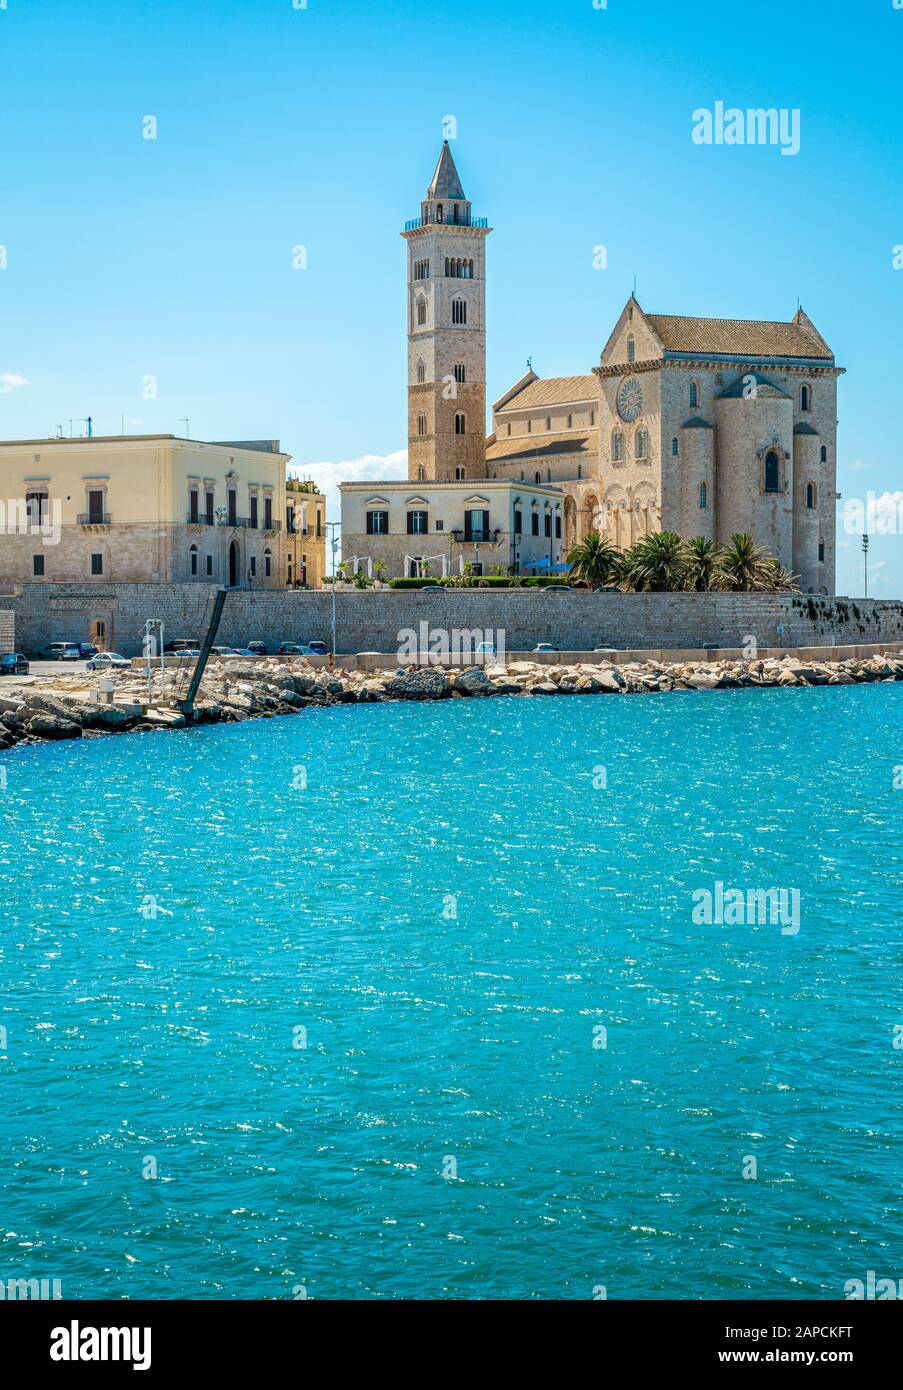 Trani waterfront avec la superbe cathédrale. Province de Barletta Andria Trani, Puglia (Pouilles), Italie. Banque D'Images